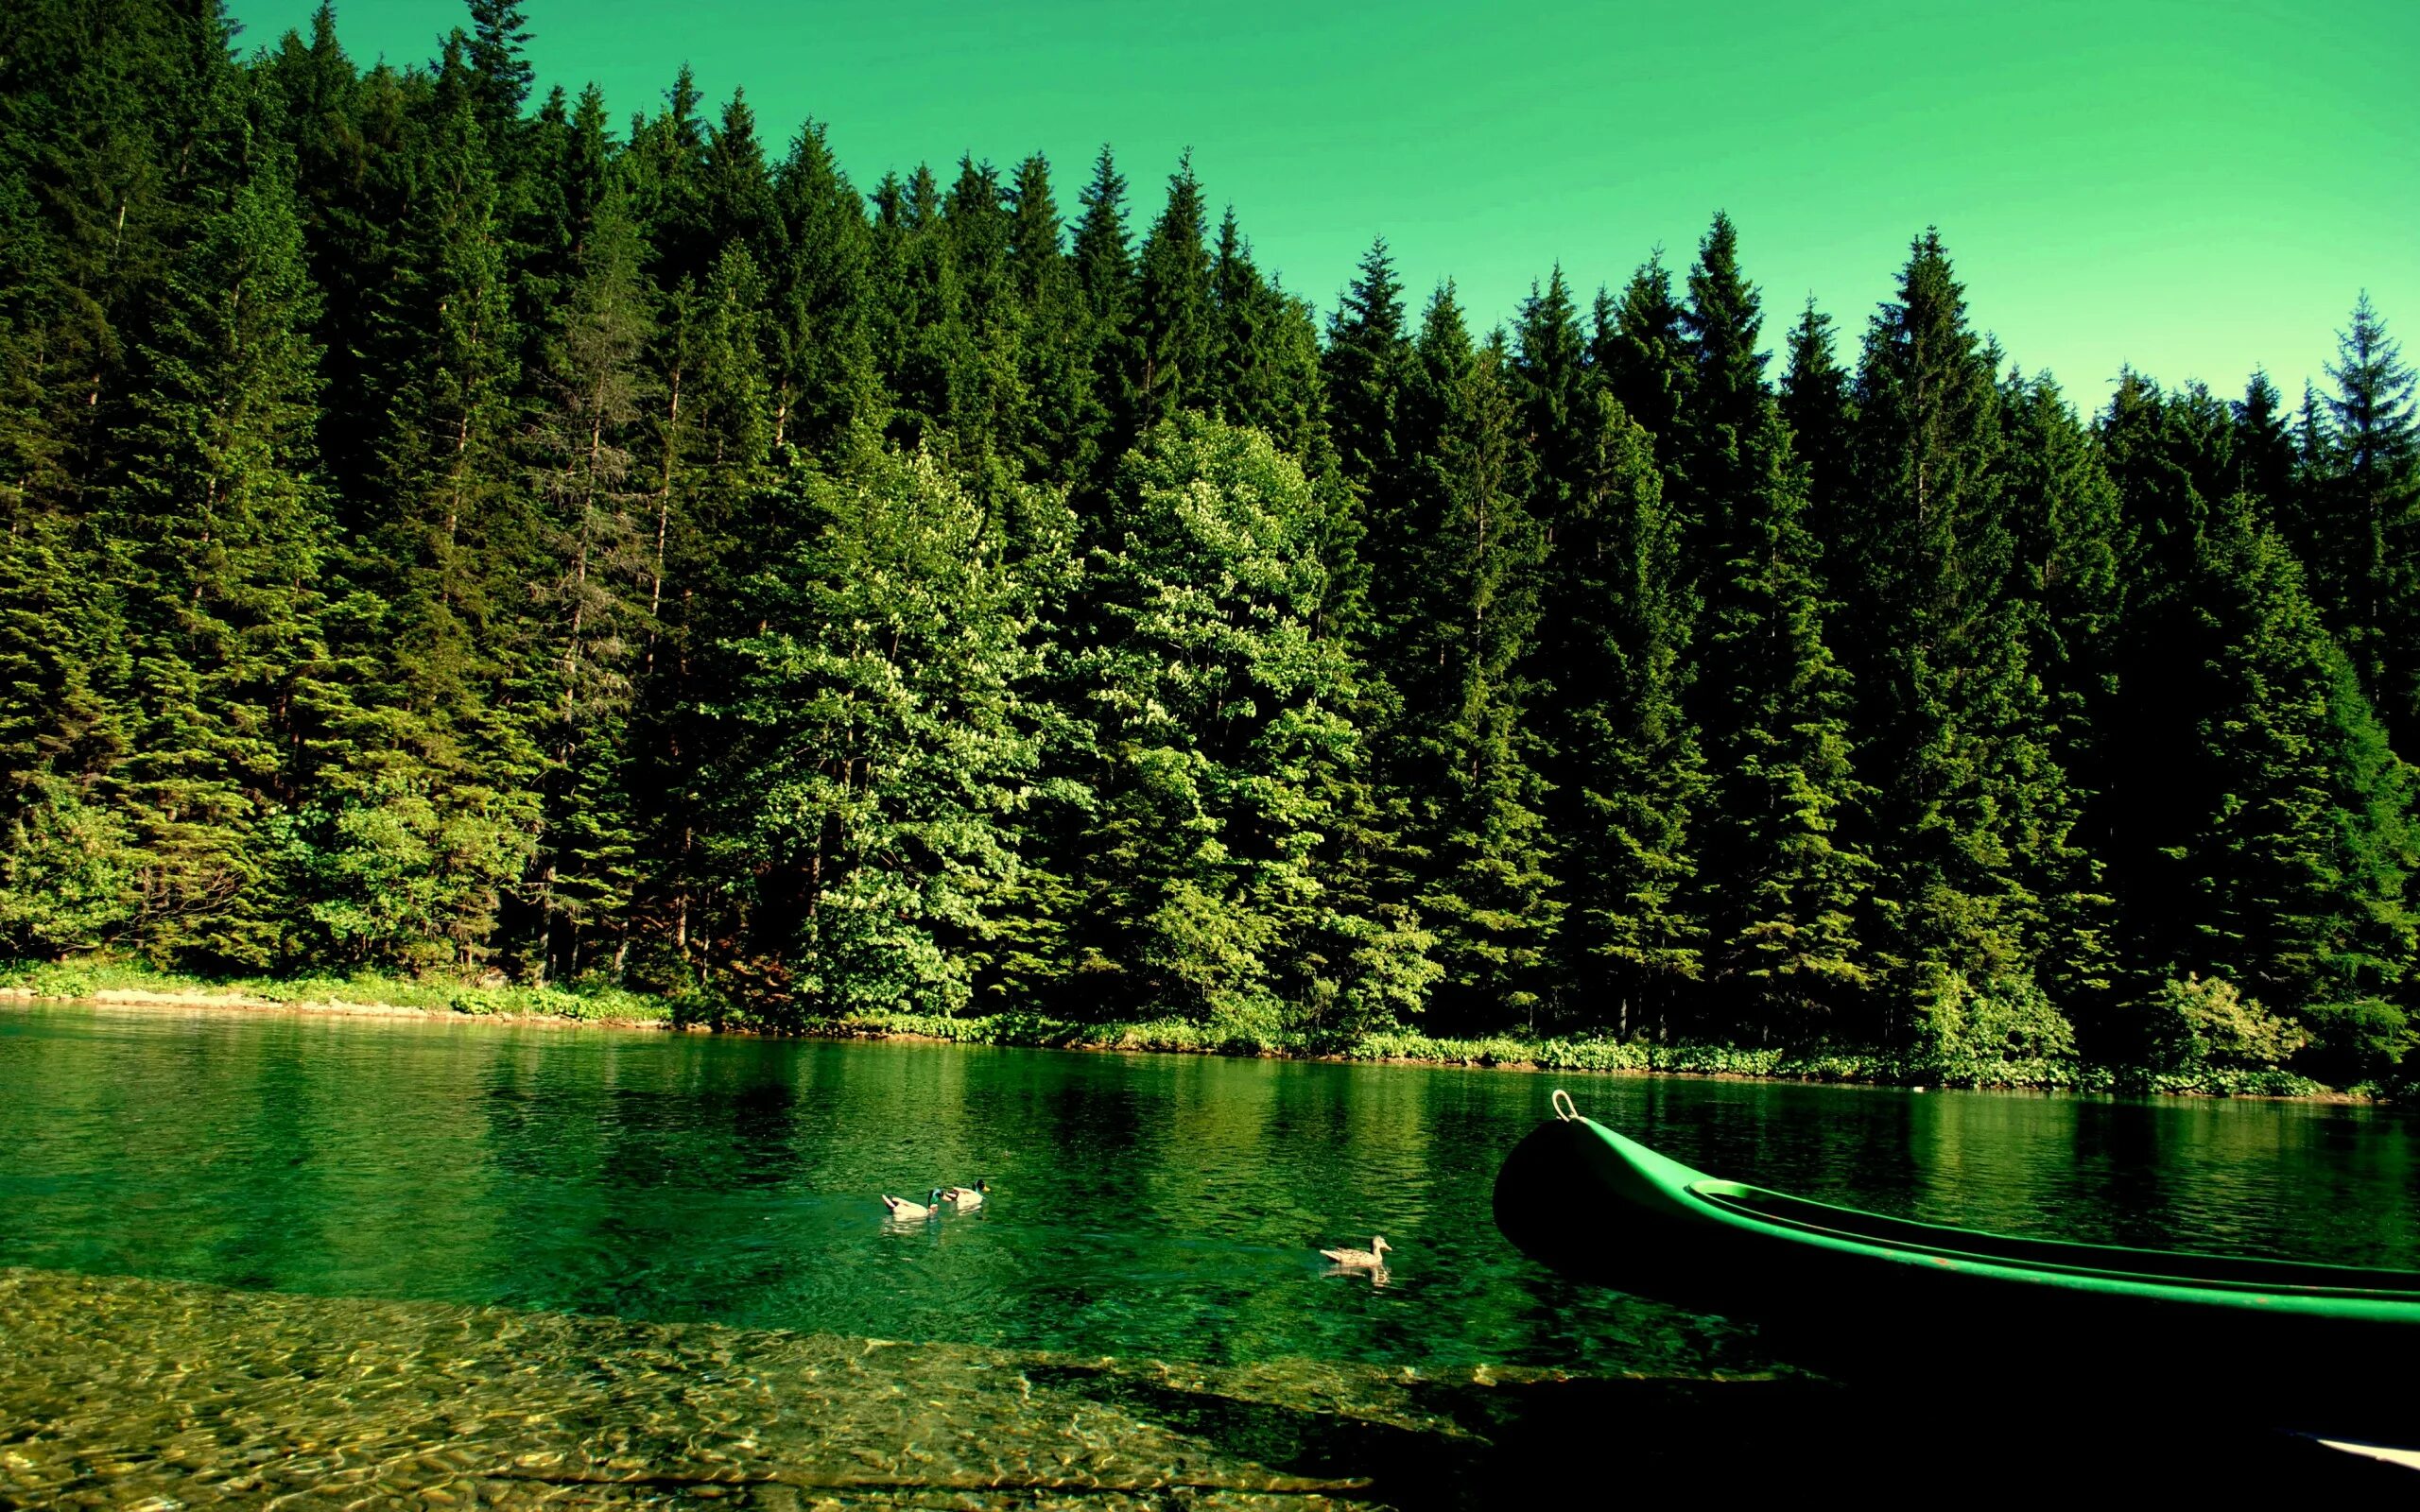 Картинки на заставку. Озеро Тургояк. Телецкое озеро. Природа лес. Озеро в лесу.